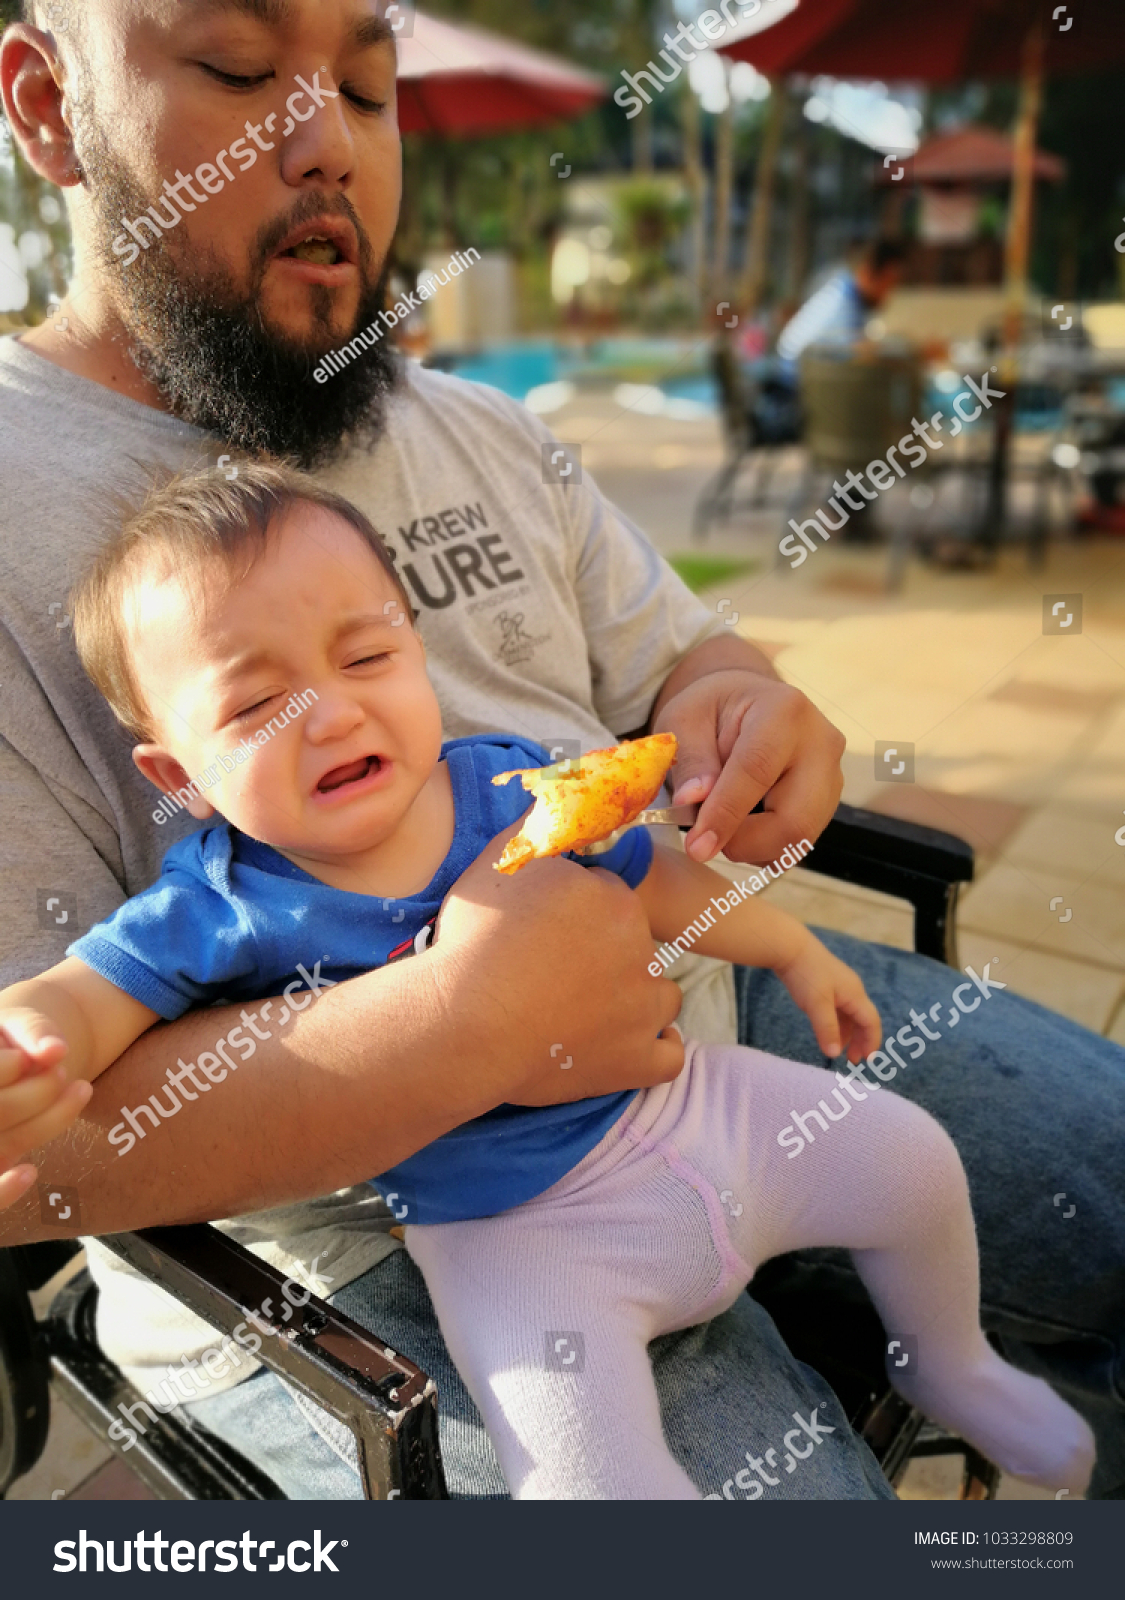 baby crying during feeding